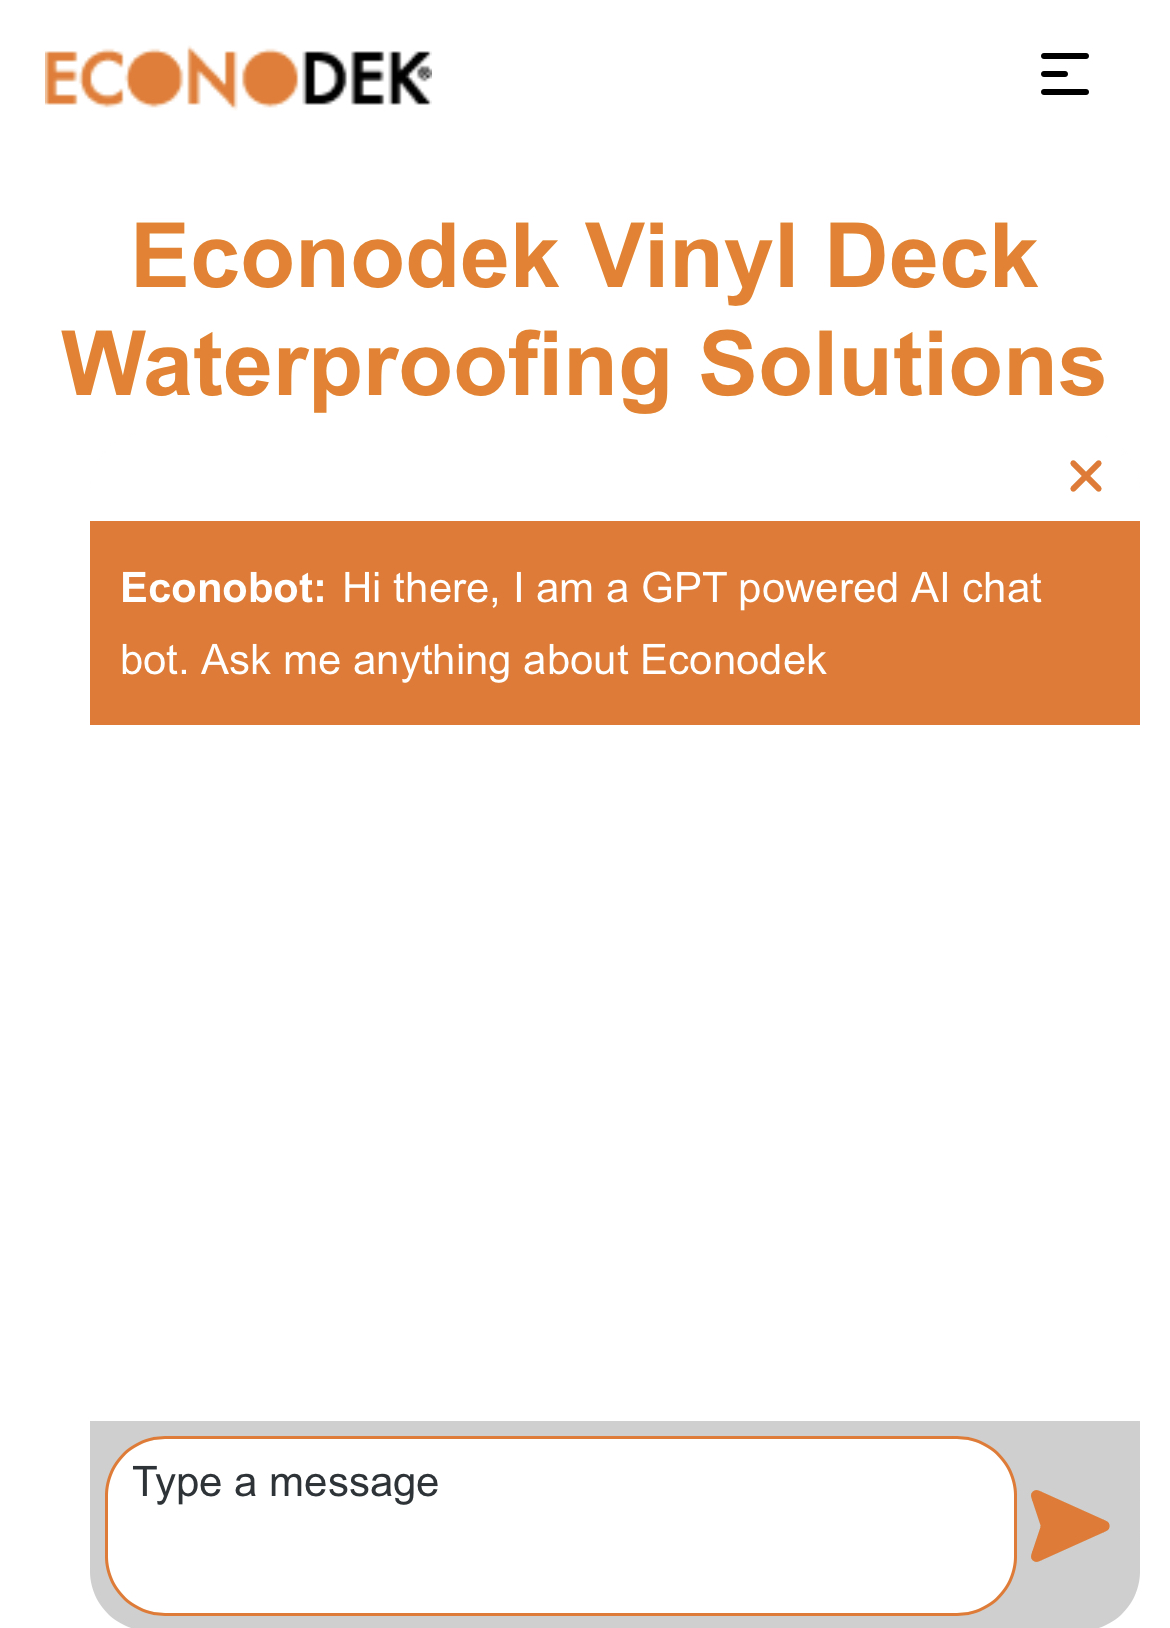 Econodek Vinyl Decking’s AI Chatbot